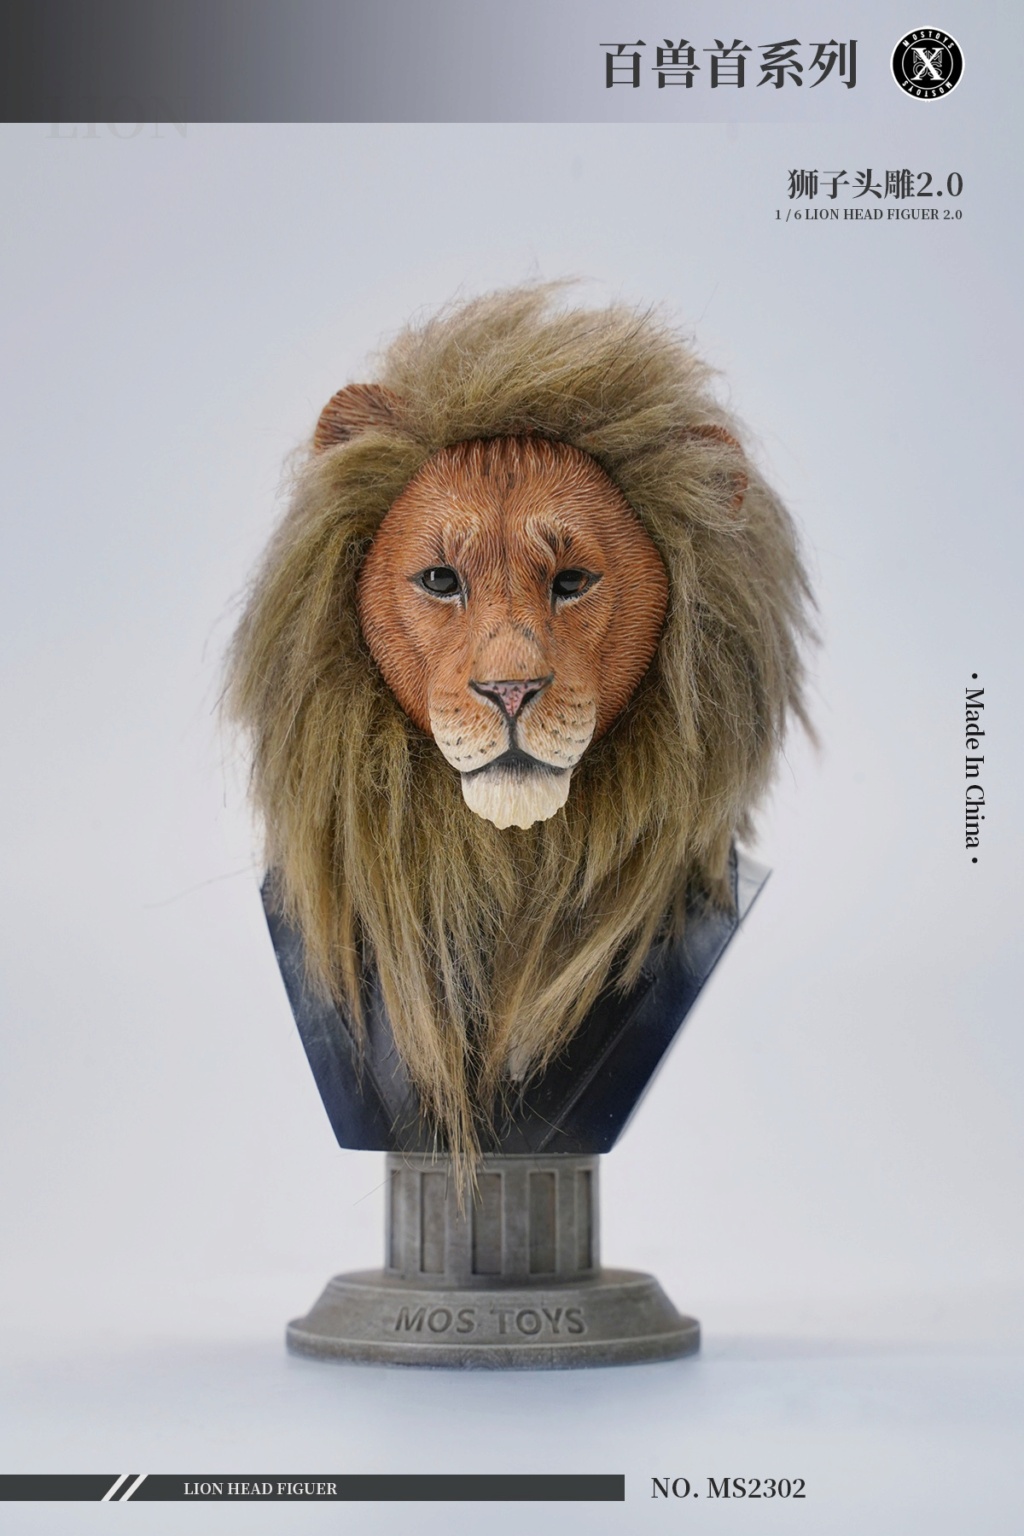 headsculpt - NEW PRODUCT: Mostoys: 1/6 MS2302 lion head sculpture 2.0 16234910